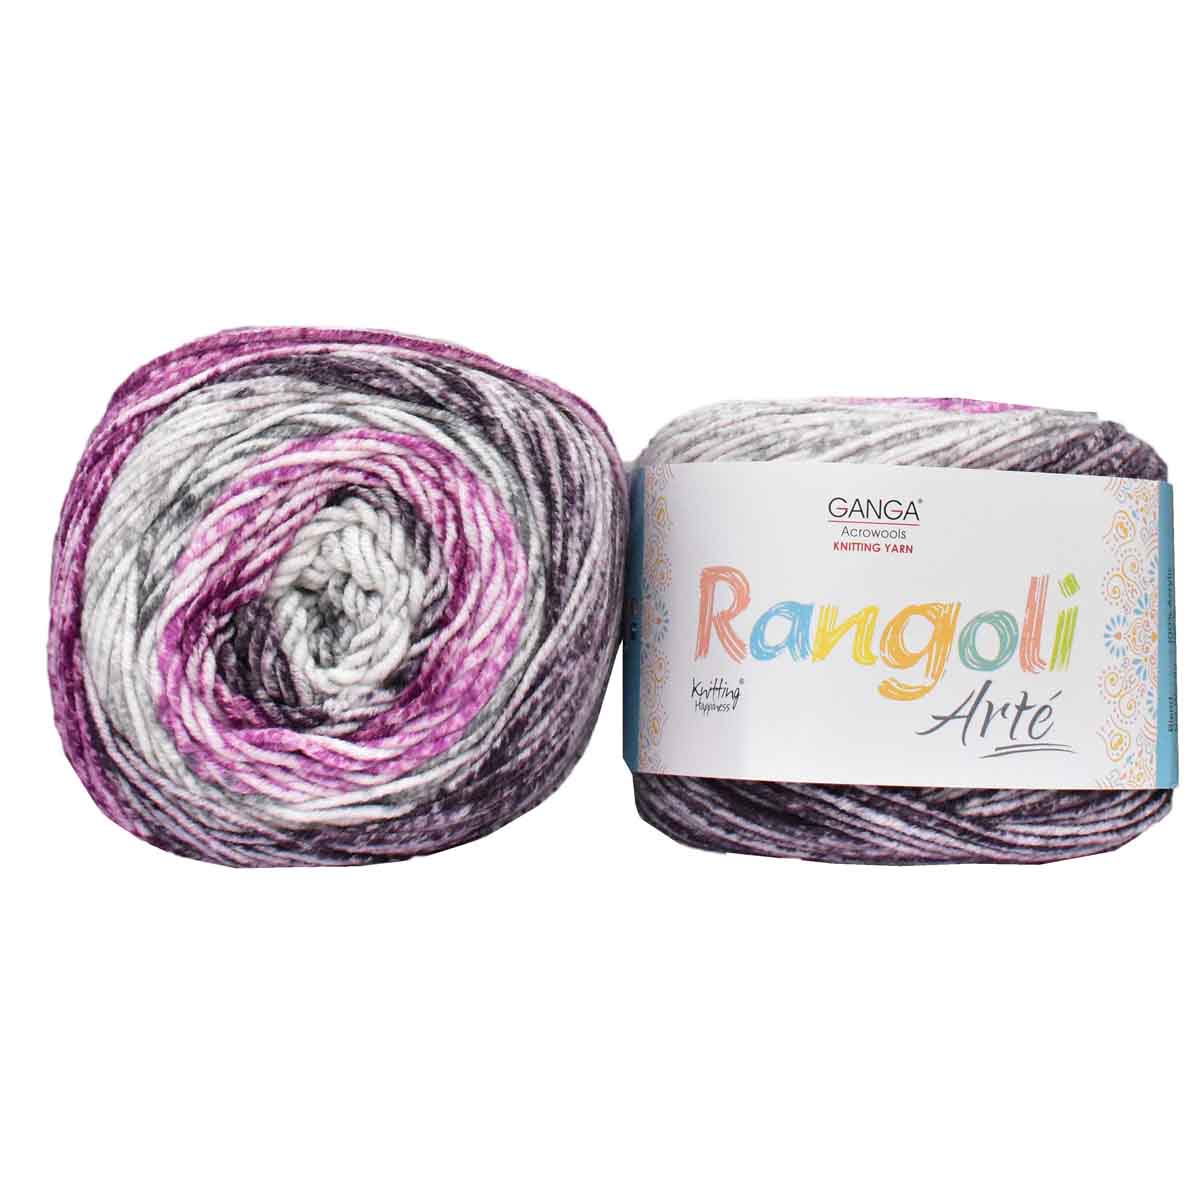 Ganga Rangoli Arte Knitting Yarn